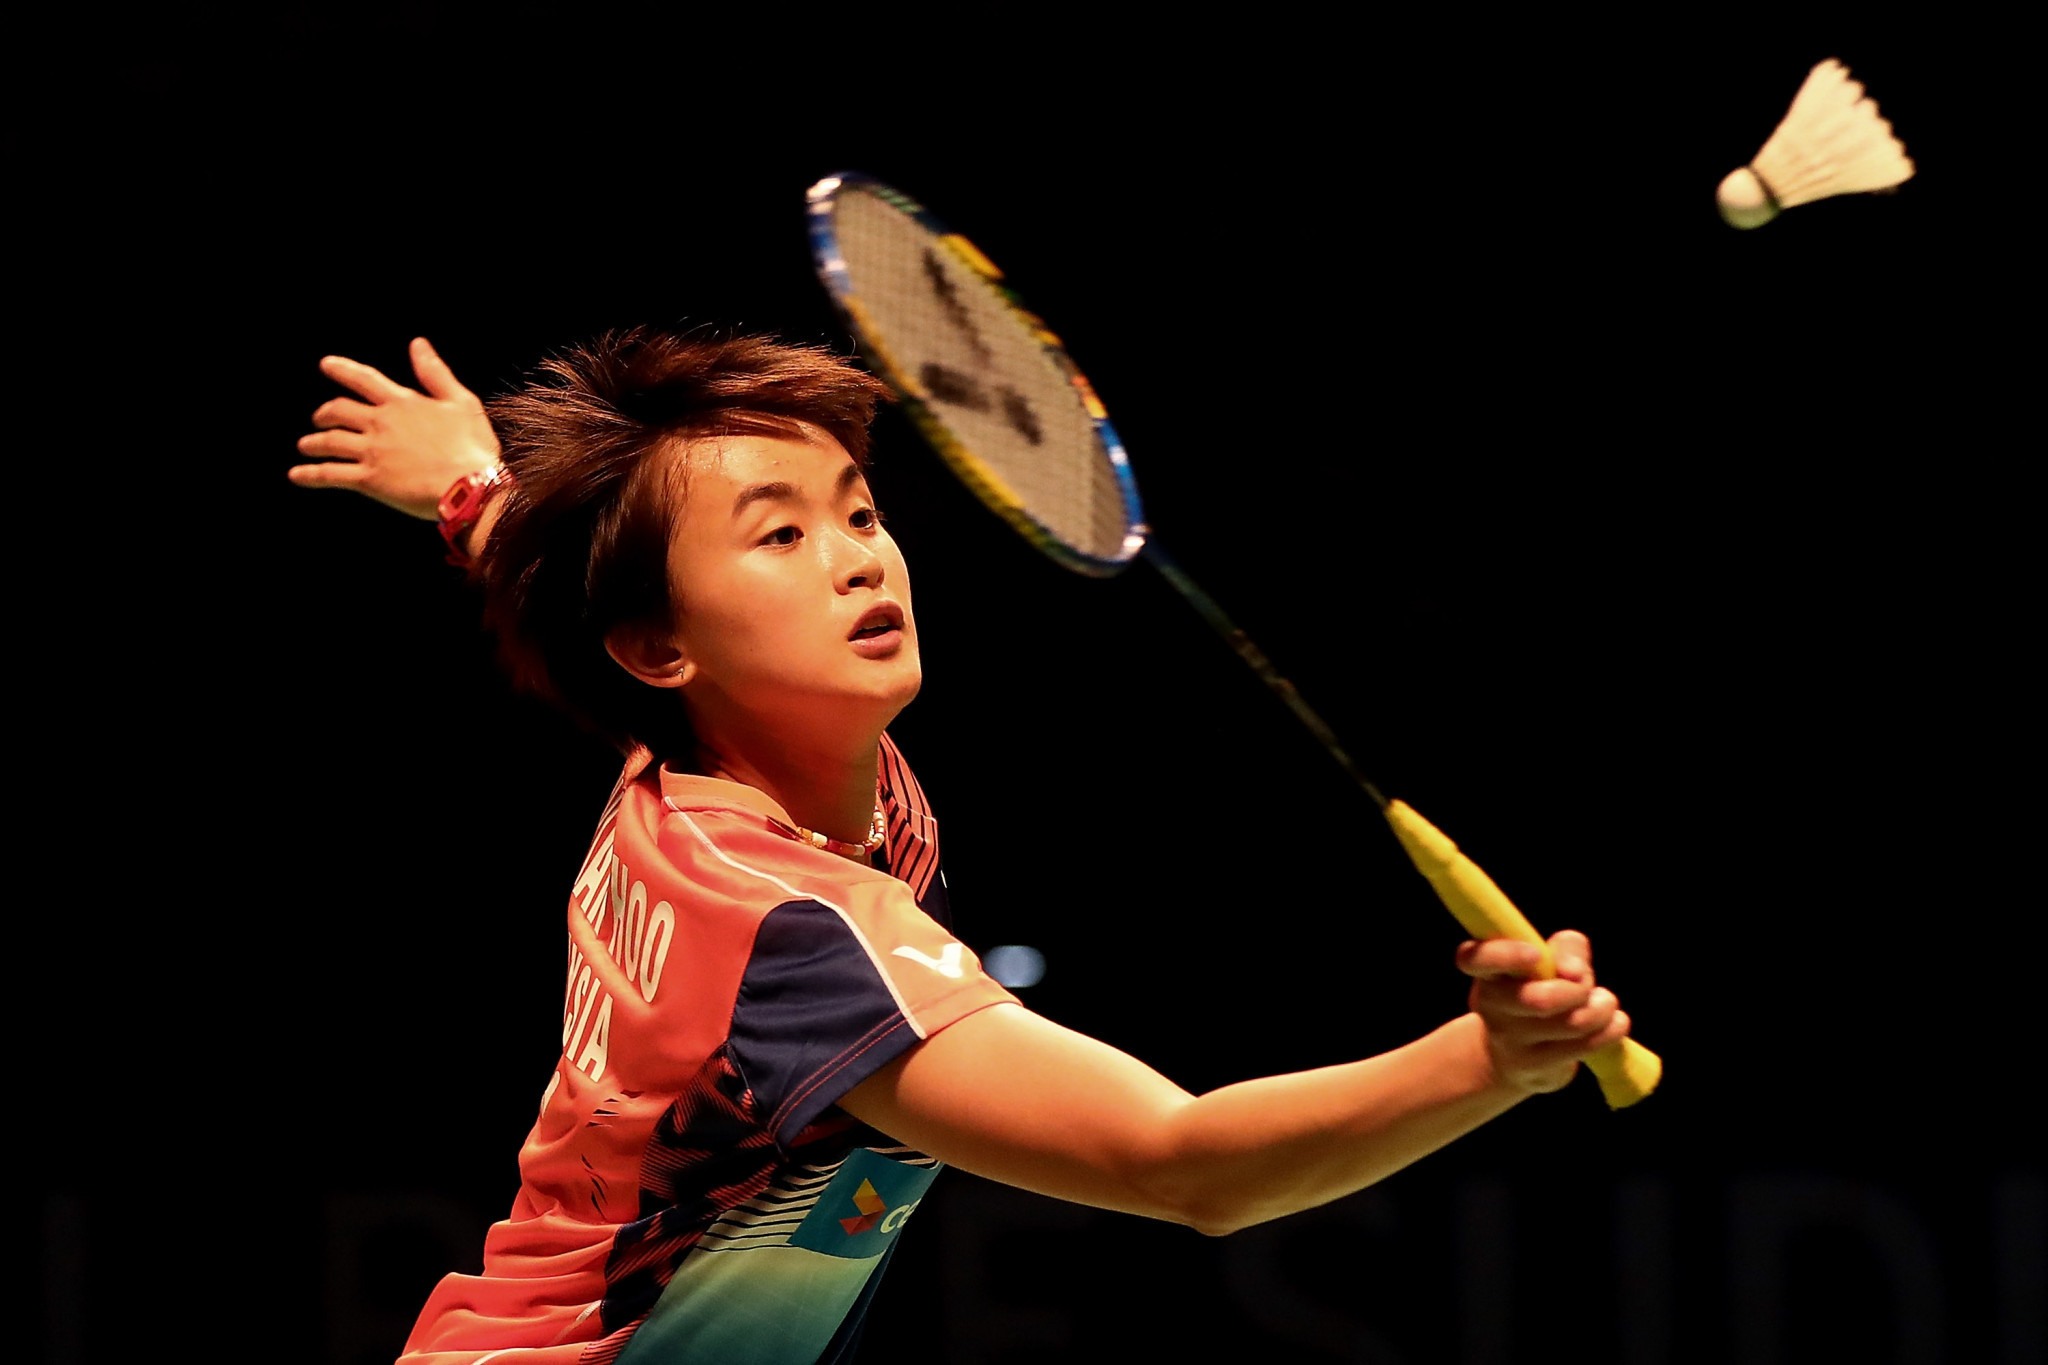 Malaysia badminton player female